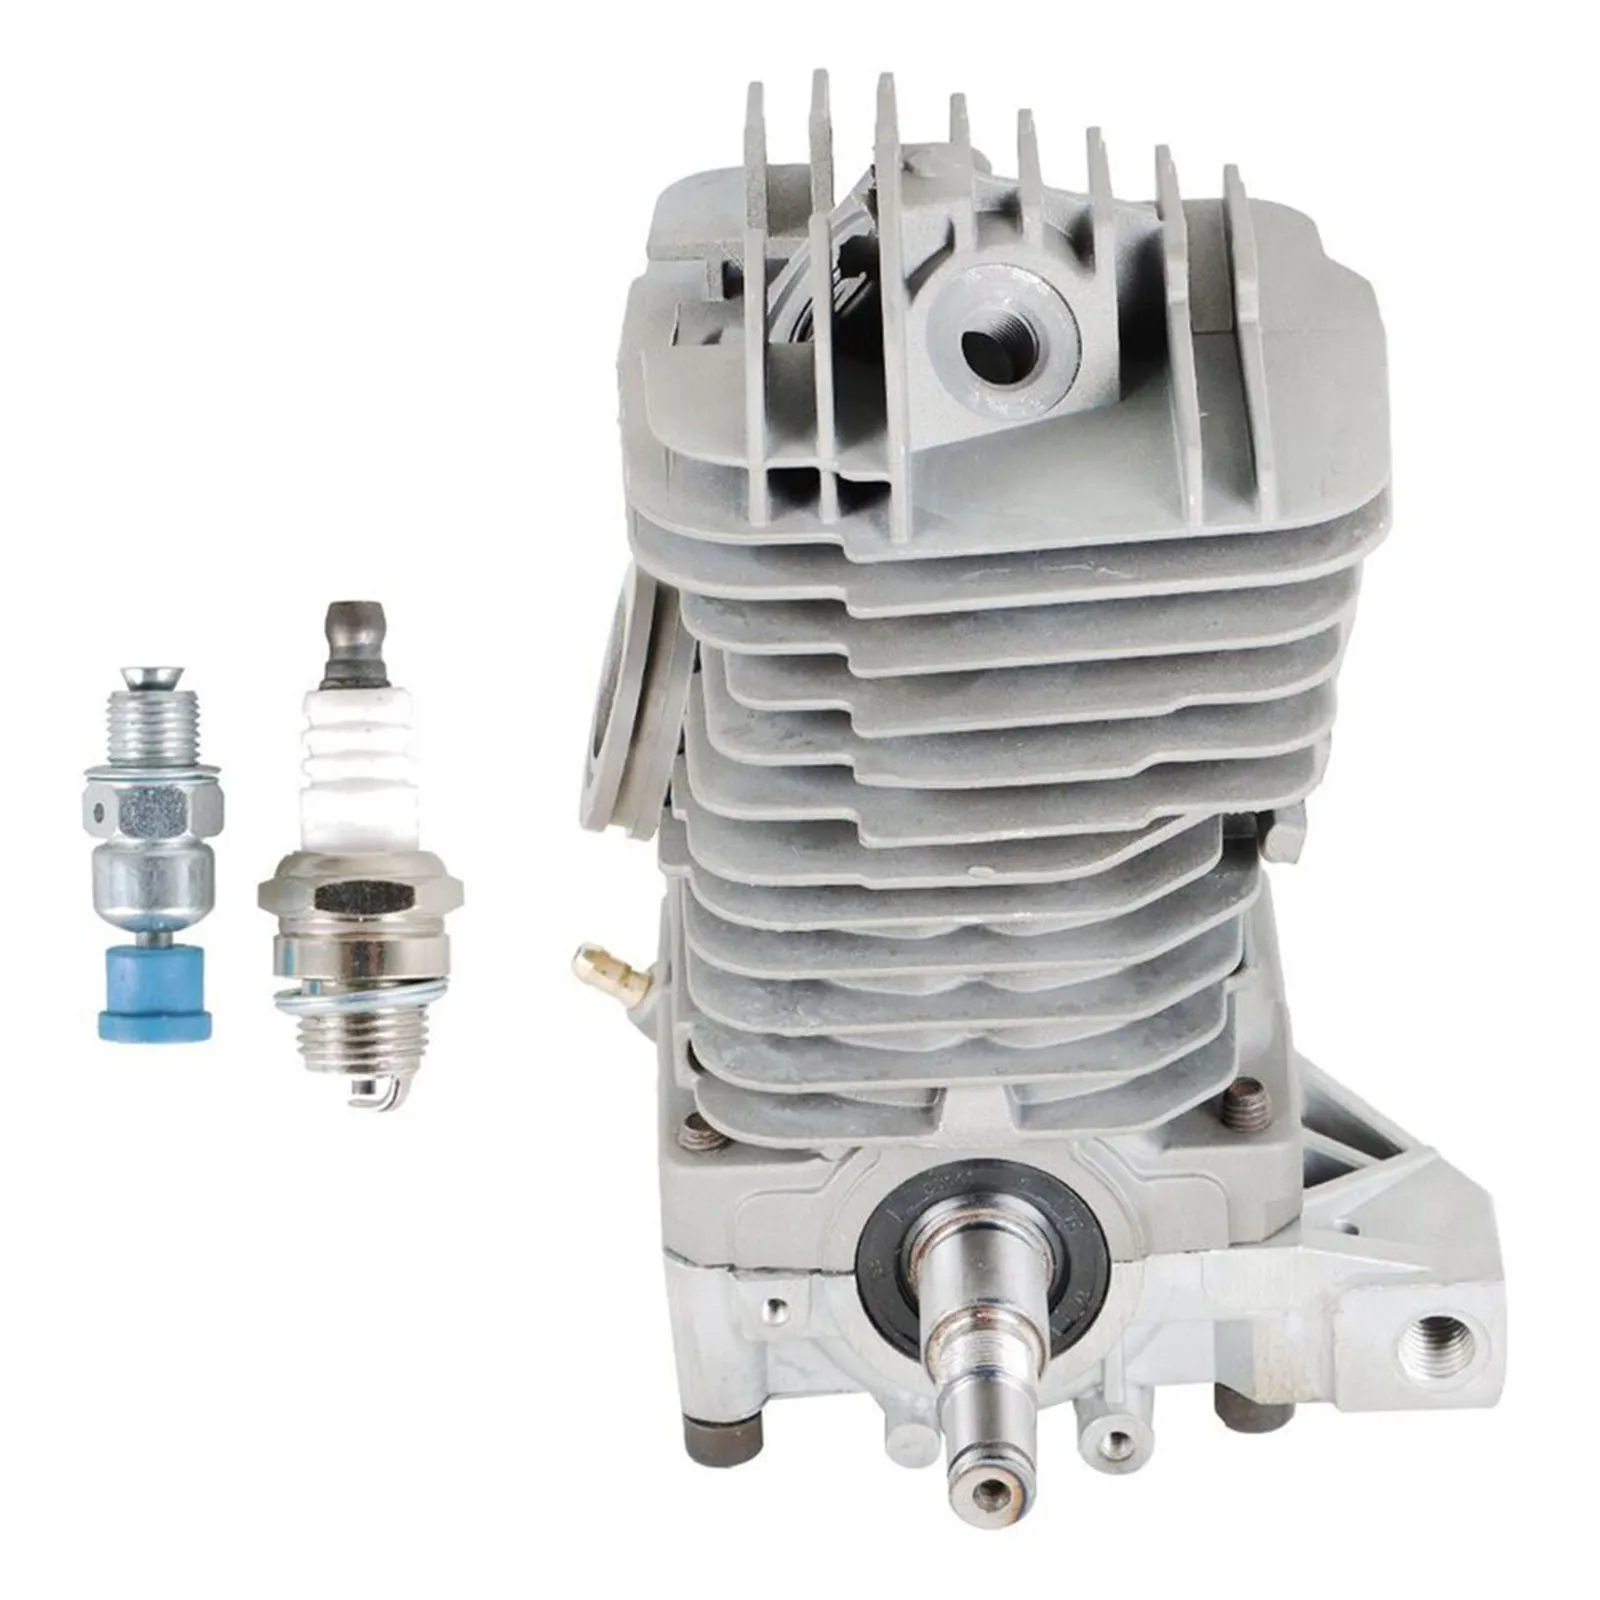 

Crankshaft Engine Motor Home Anti Corrosion Chainsaw Cylinder Piston Long Lasting For STIHL MS290 MS310 029 039